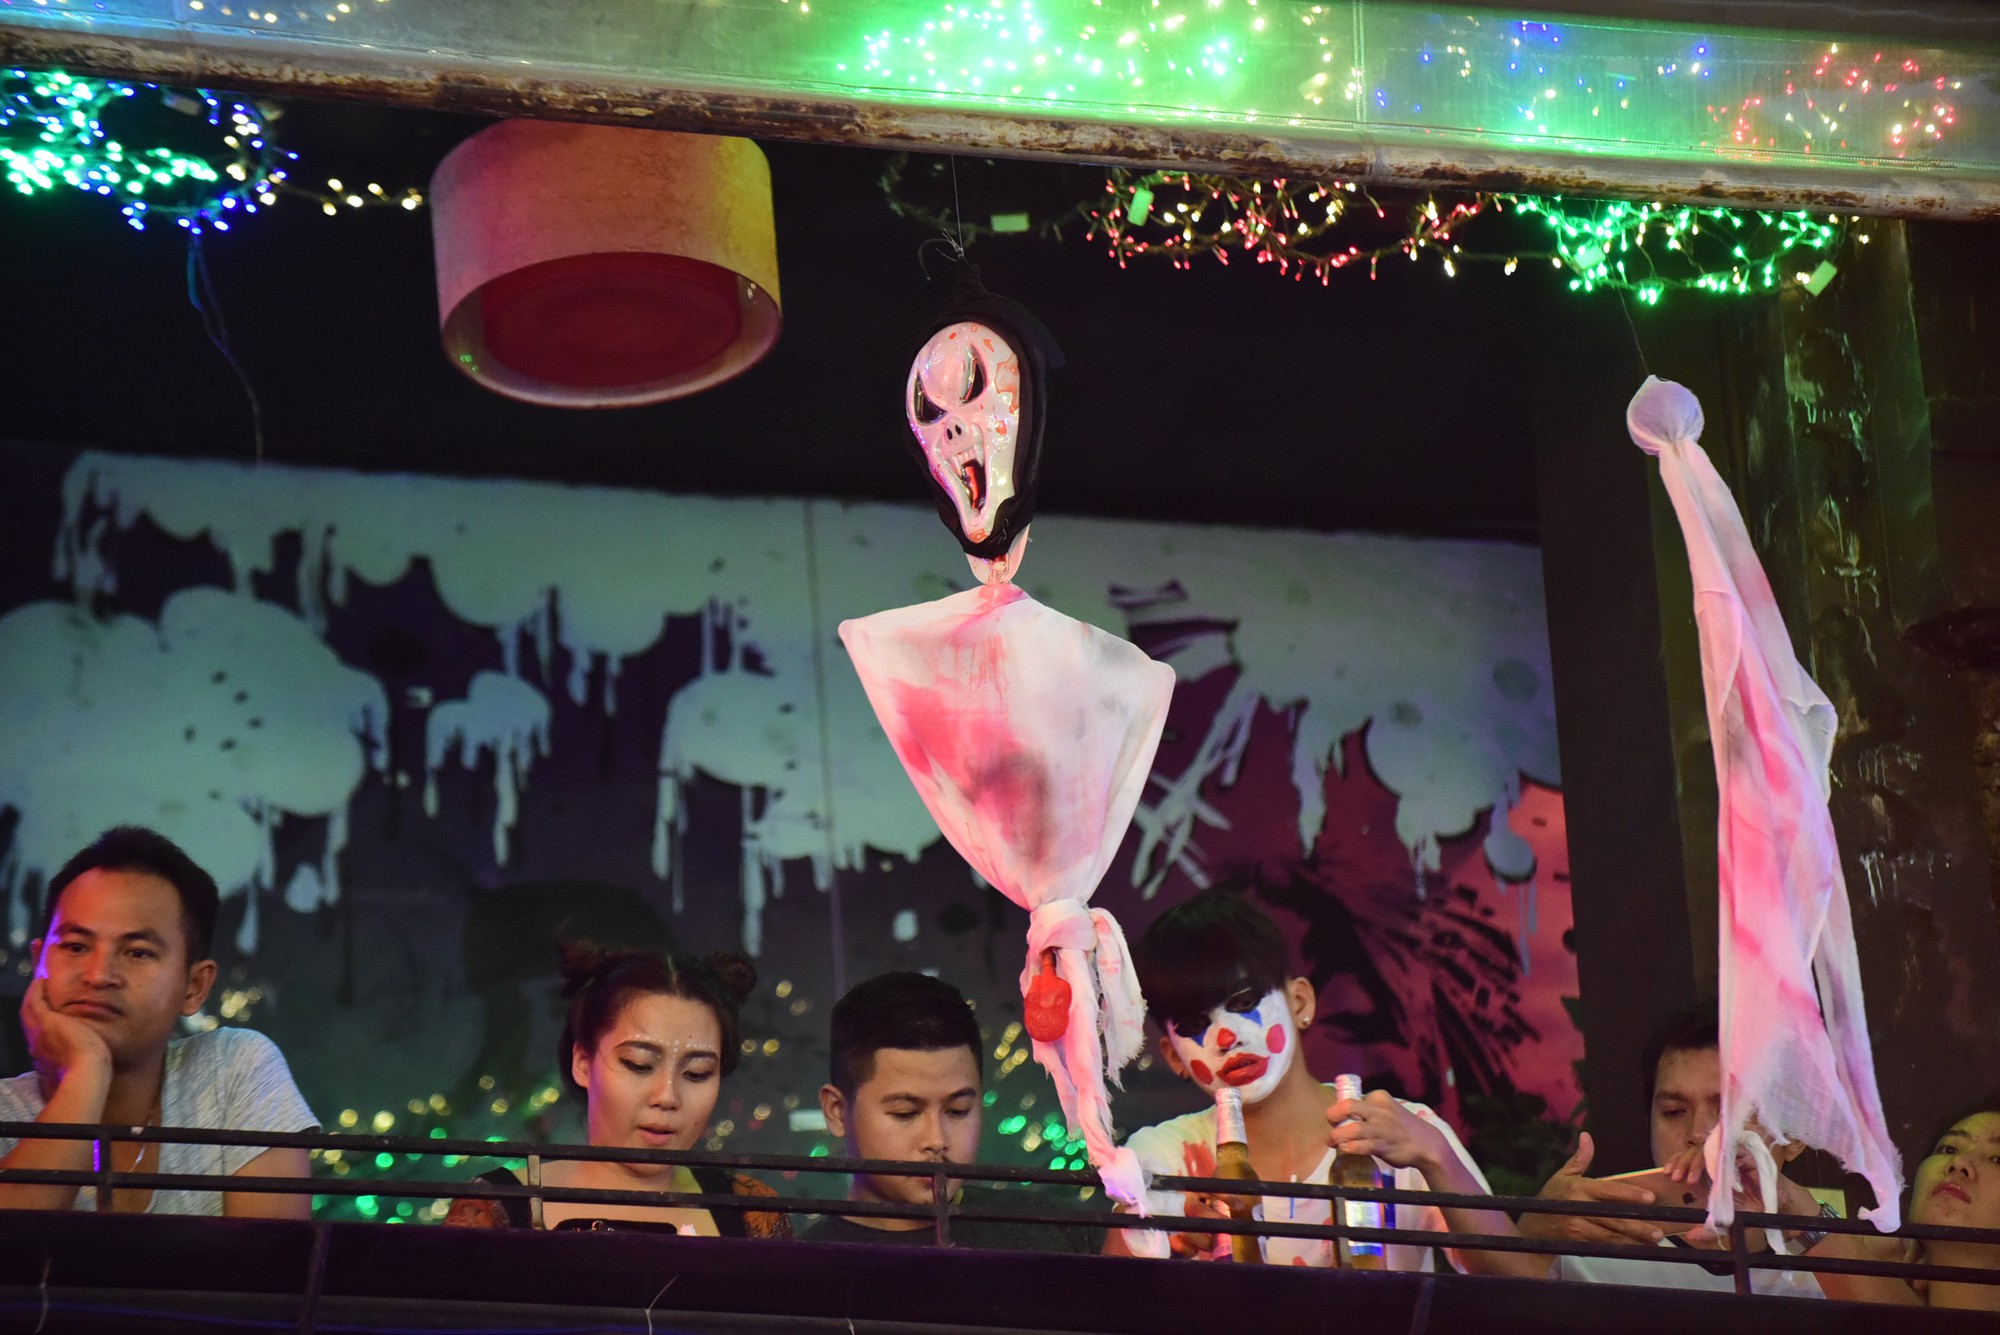 A pub on Bui Vien Street displays Halloween-themed decorations.